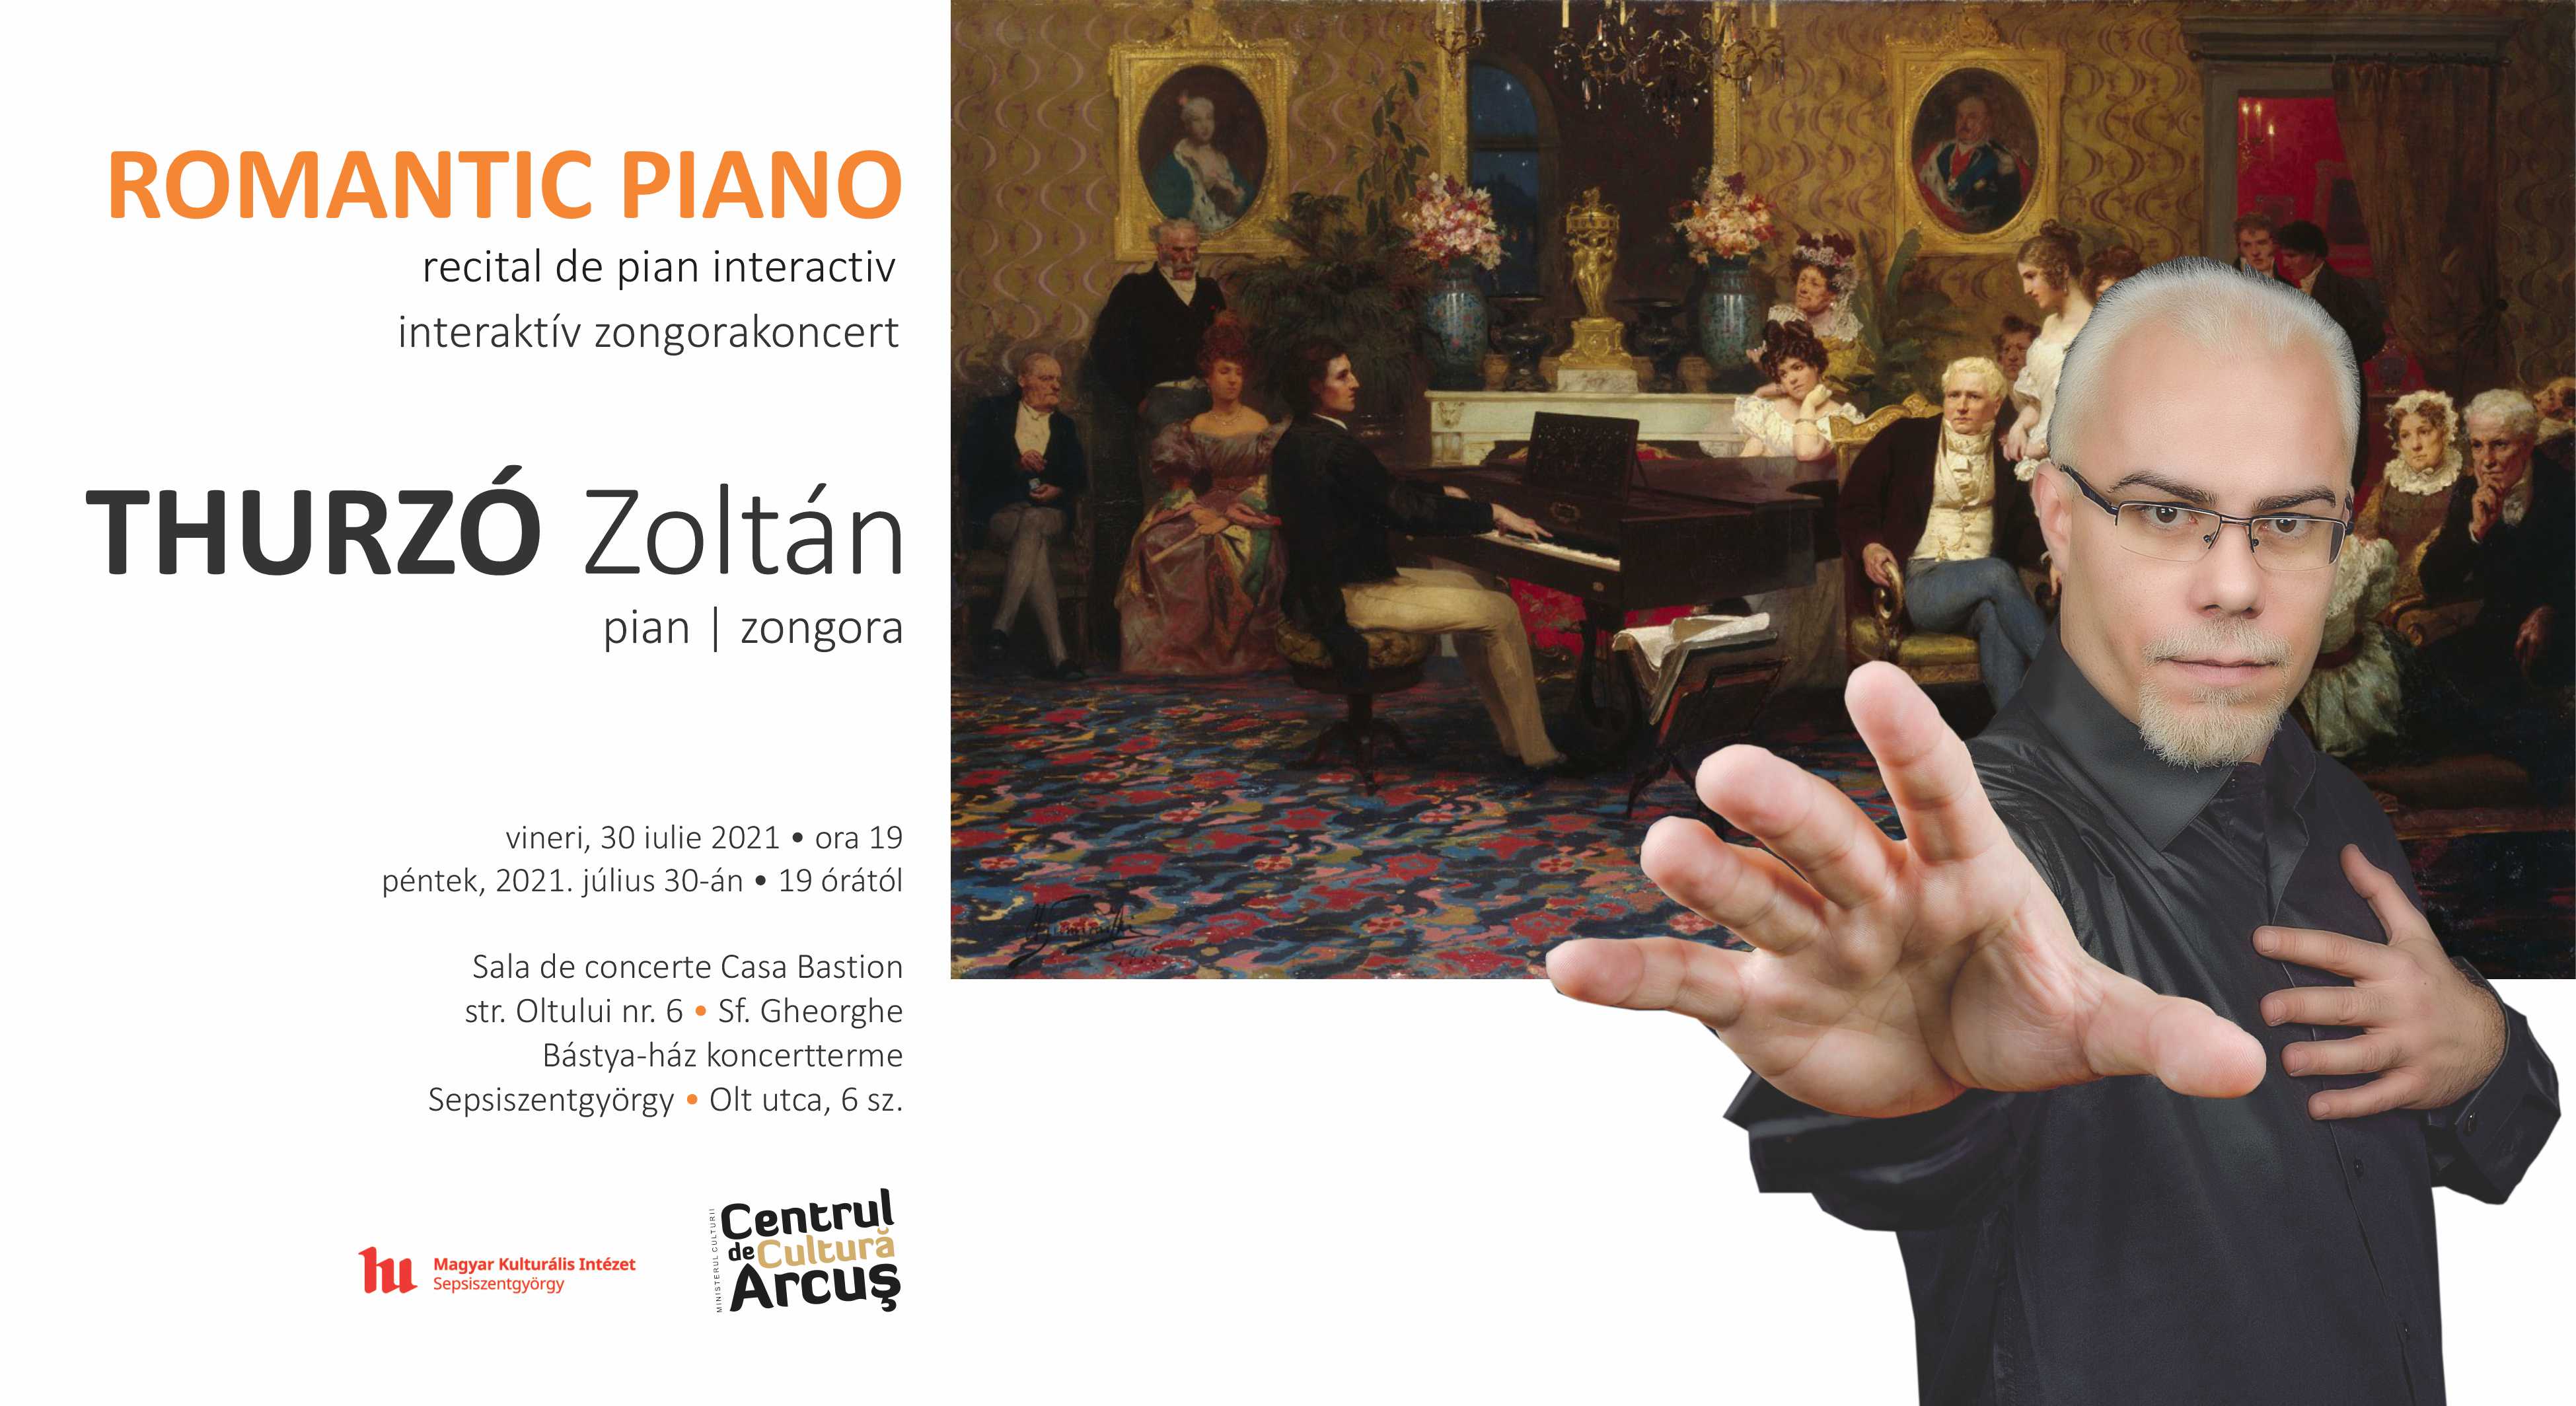 ROMANTIC PIANO - THURZÓ Zoltán